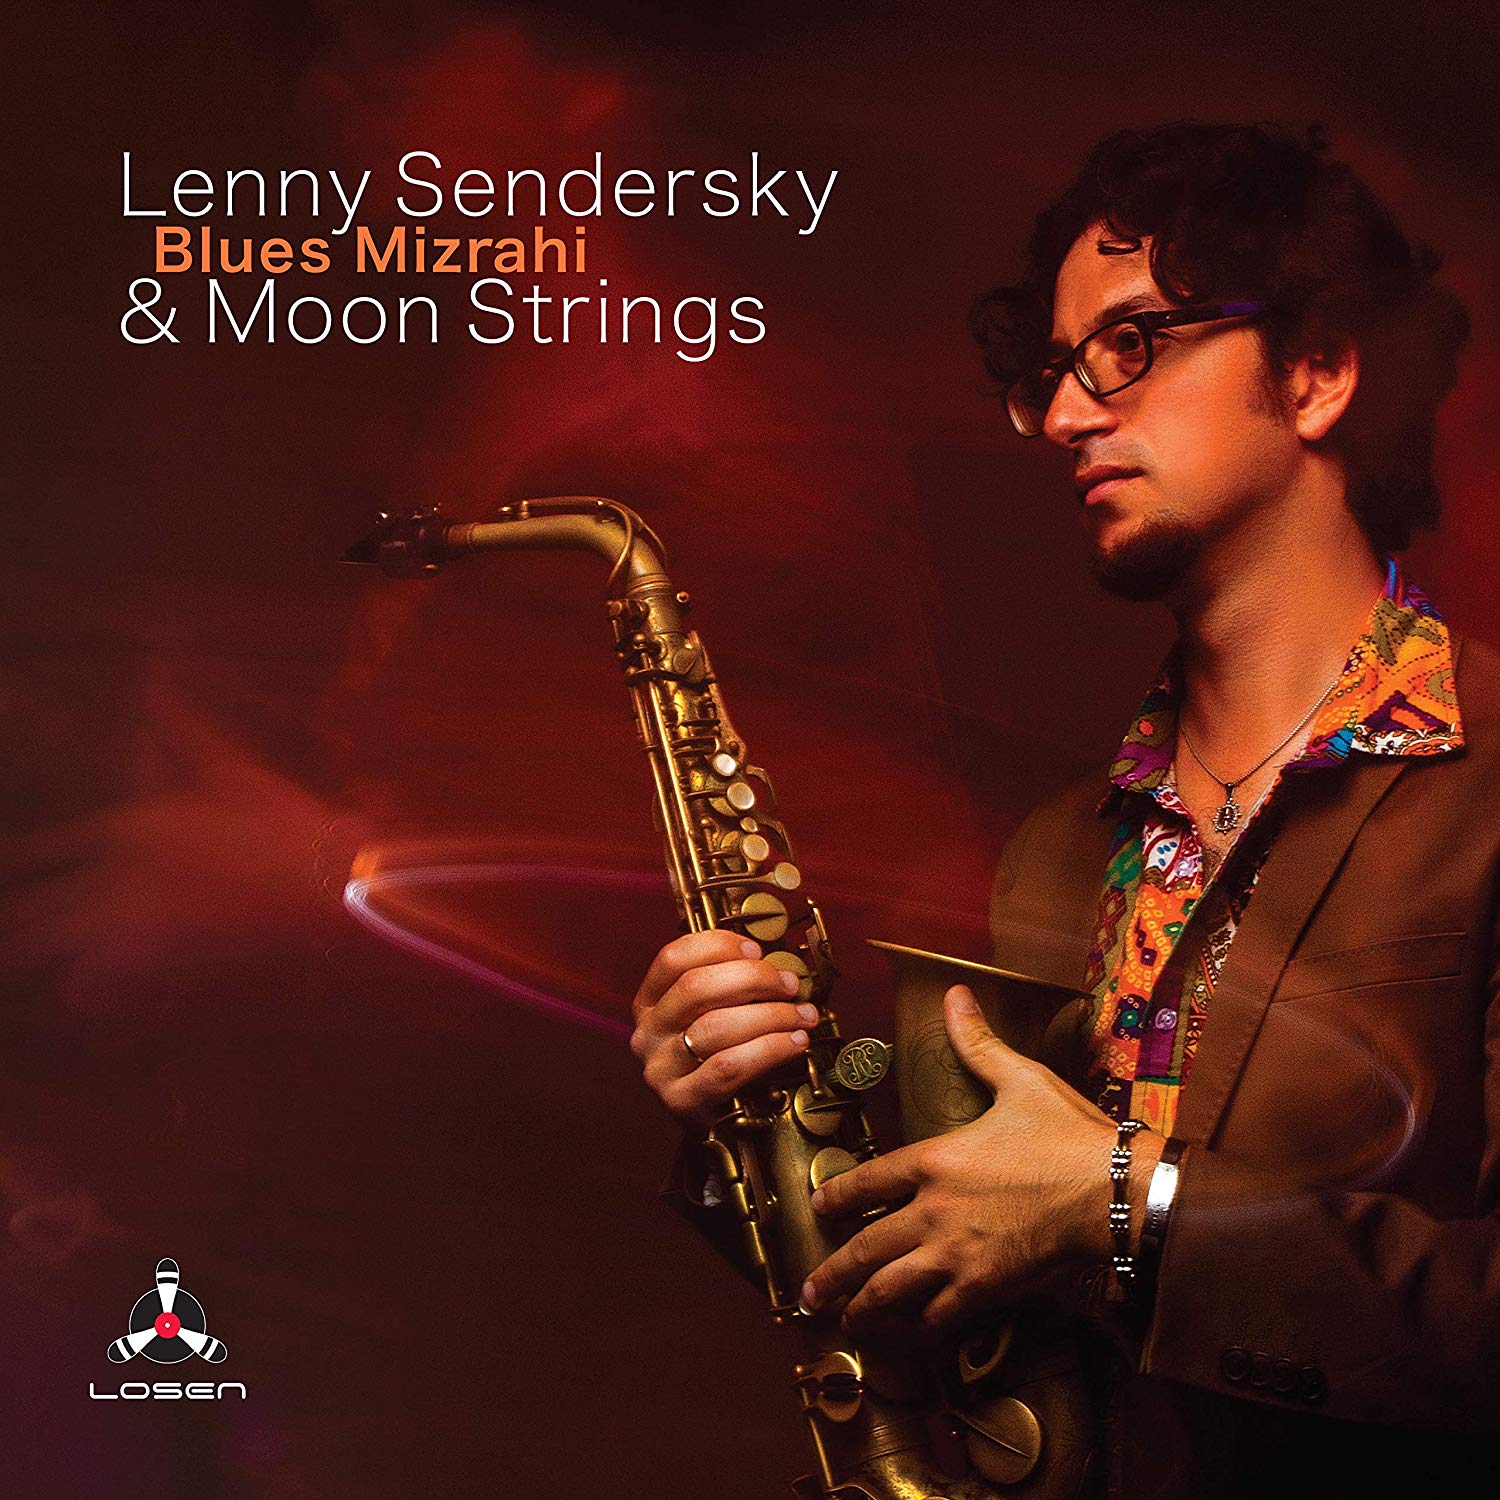 LENNY SENDERSKY - Blues Mizrahi cover 